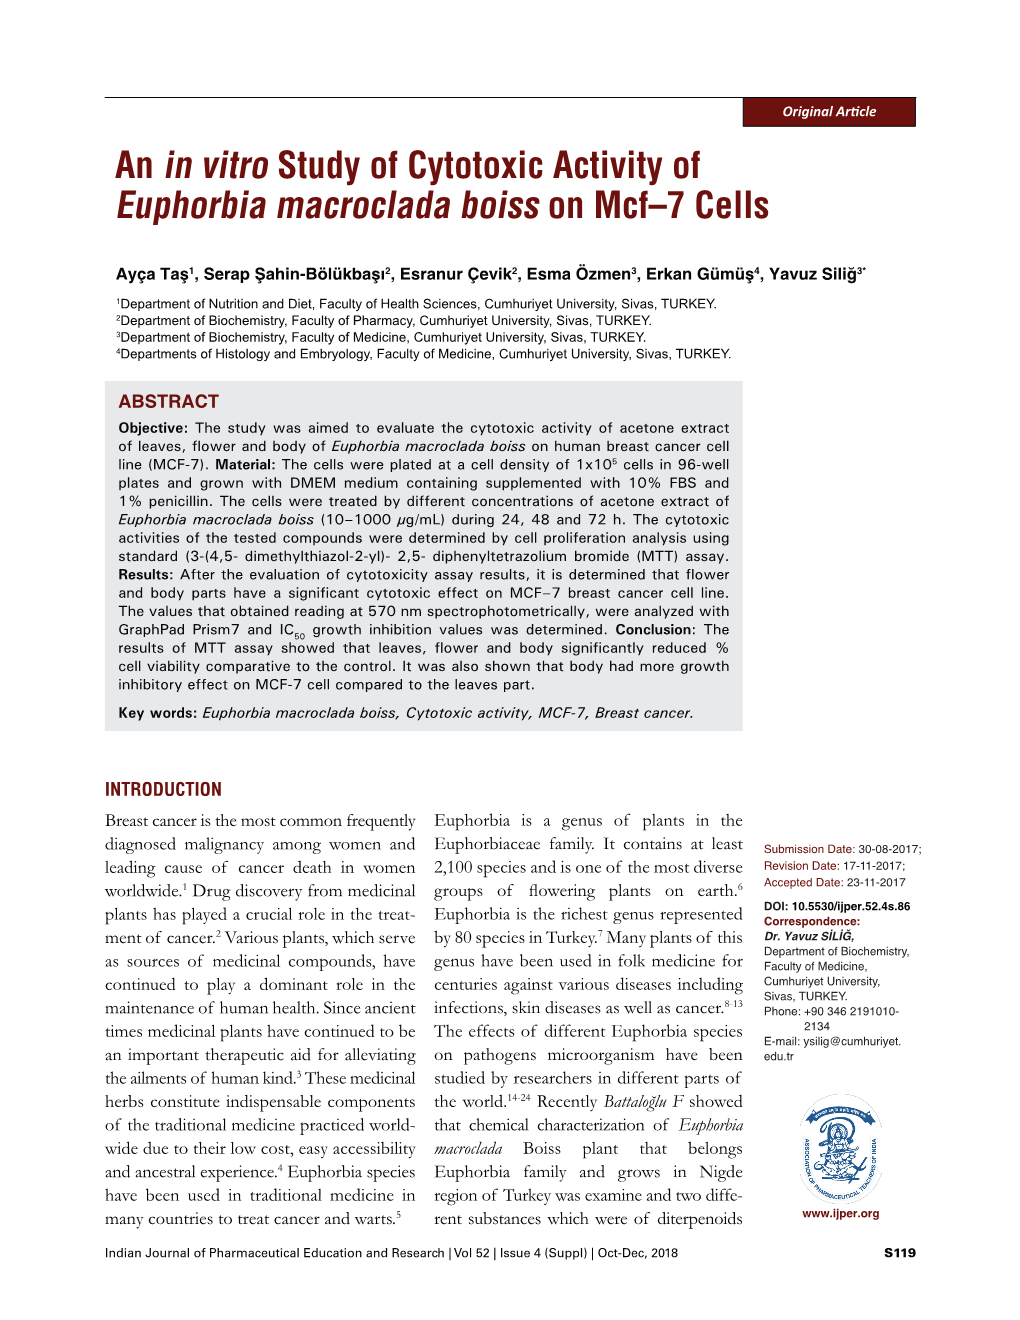 An in Vitro Study of Cytotoxic Activity of Euphorbia Macroclada Boiss on Mcf–7 Cells